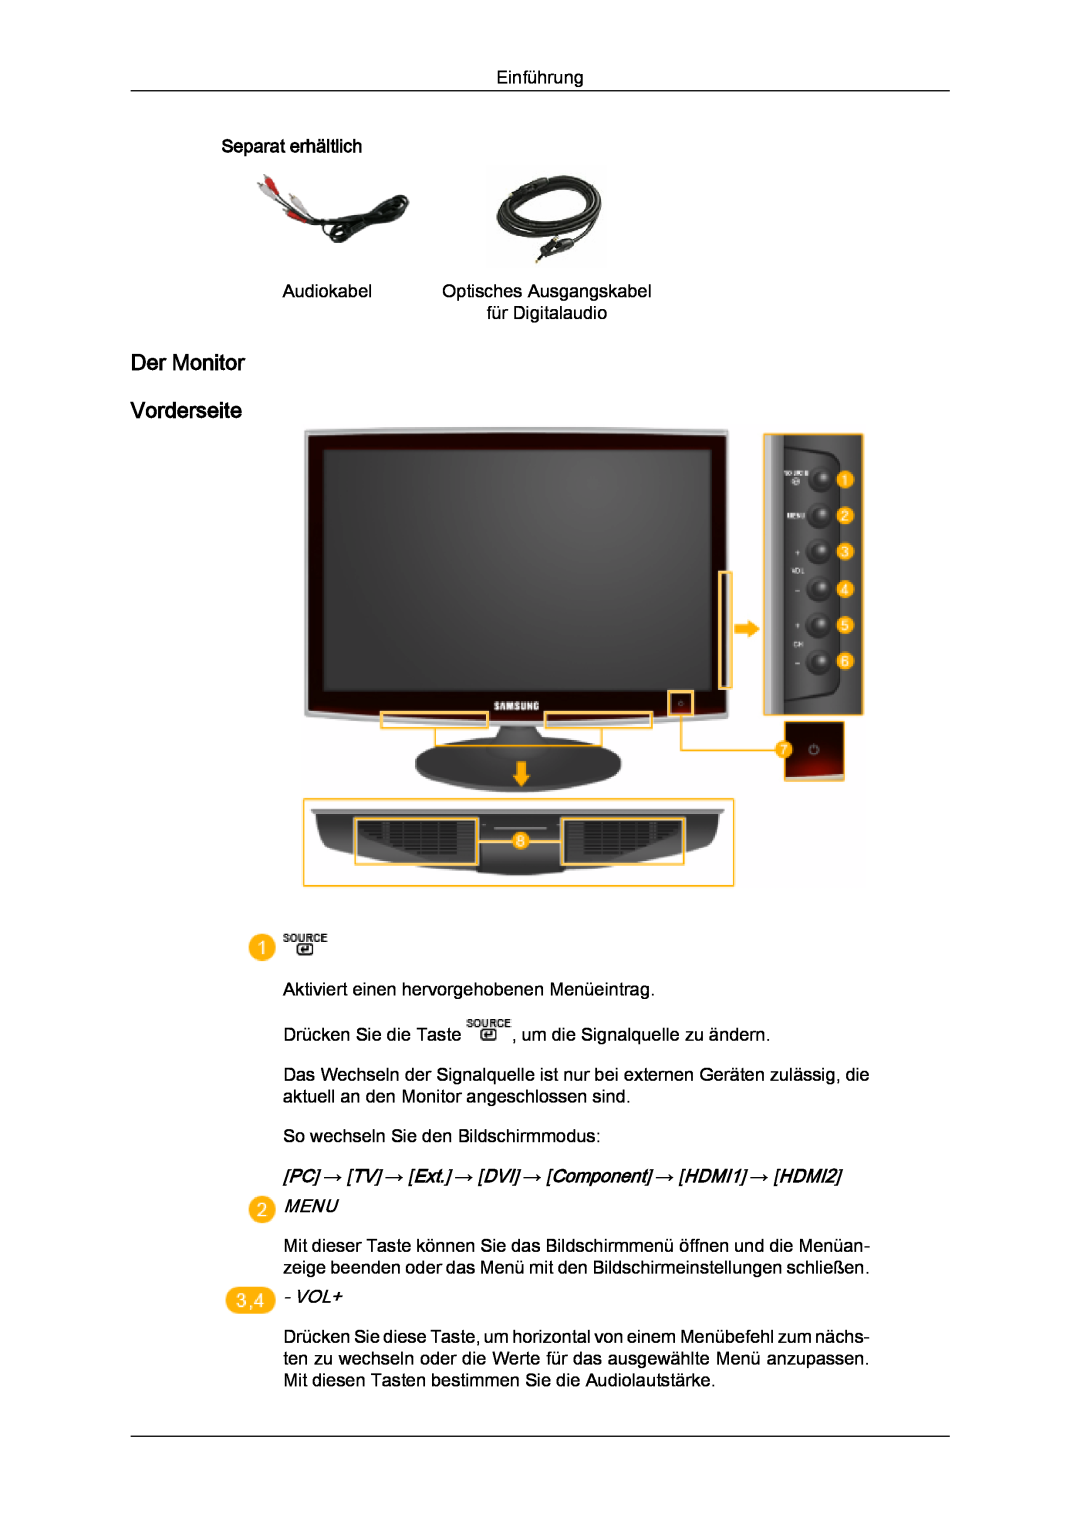 Samsung LS20TDDSUV/EN manual Der Monitor Vorderseite, Separat erhältlich, PC → TV → Ext. → DVI → Component → HDMI1 → HDMI2 